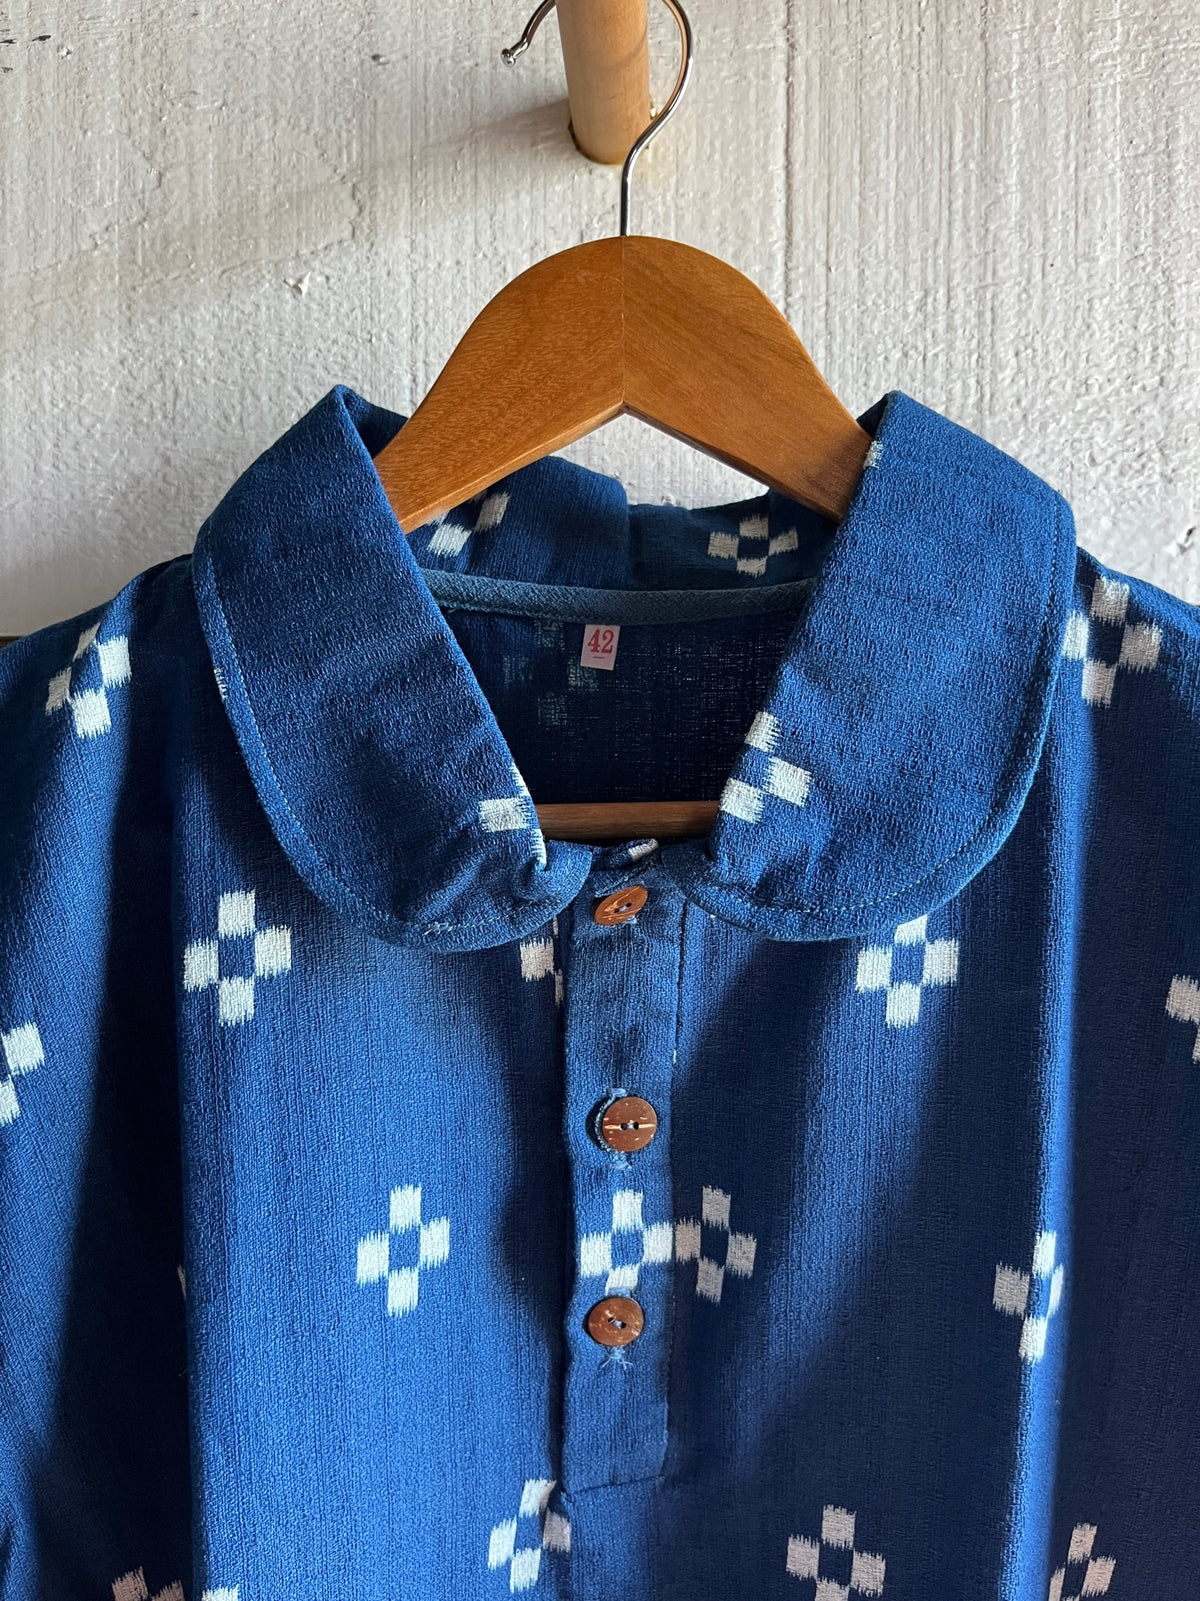 Vintage Indigo Textile Shirt